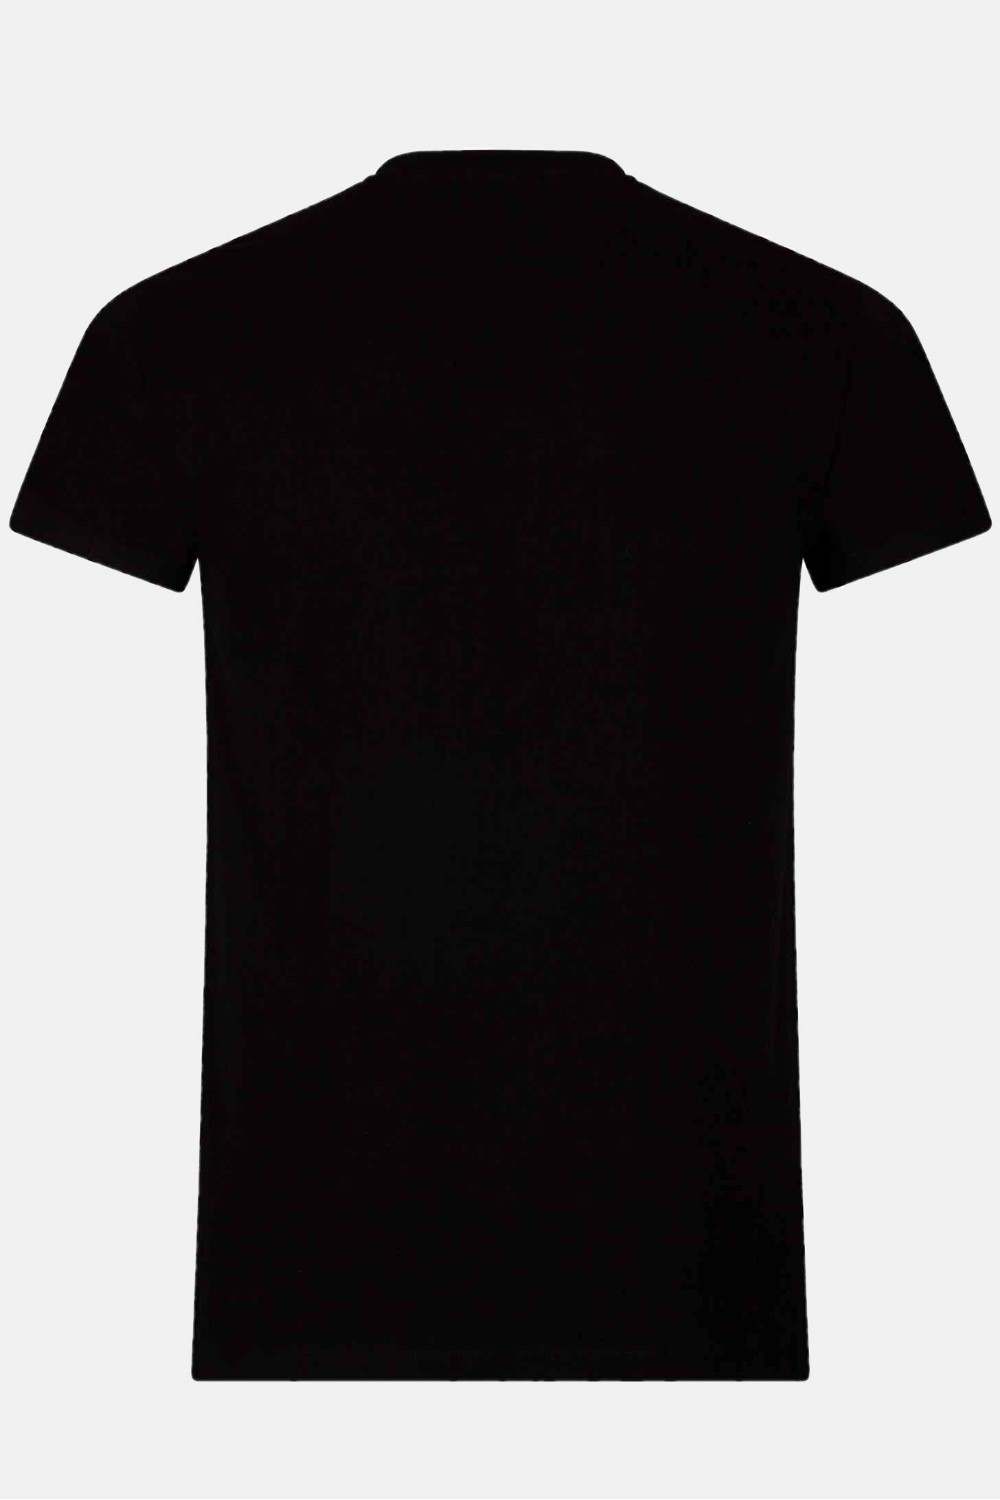 Street camiseta negra hombre - Patrice Catanzaro Página Oficial